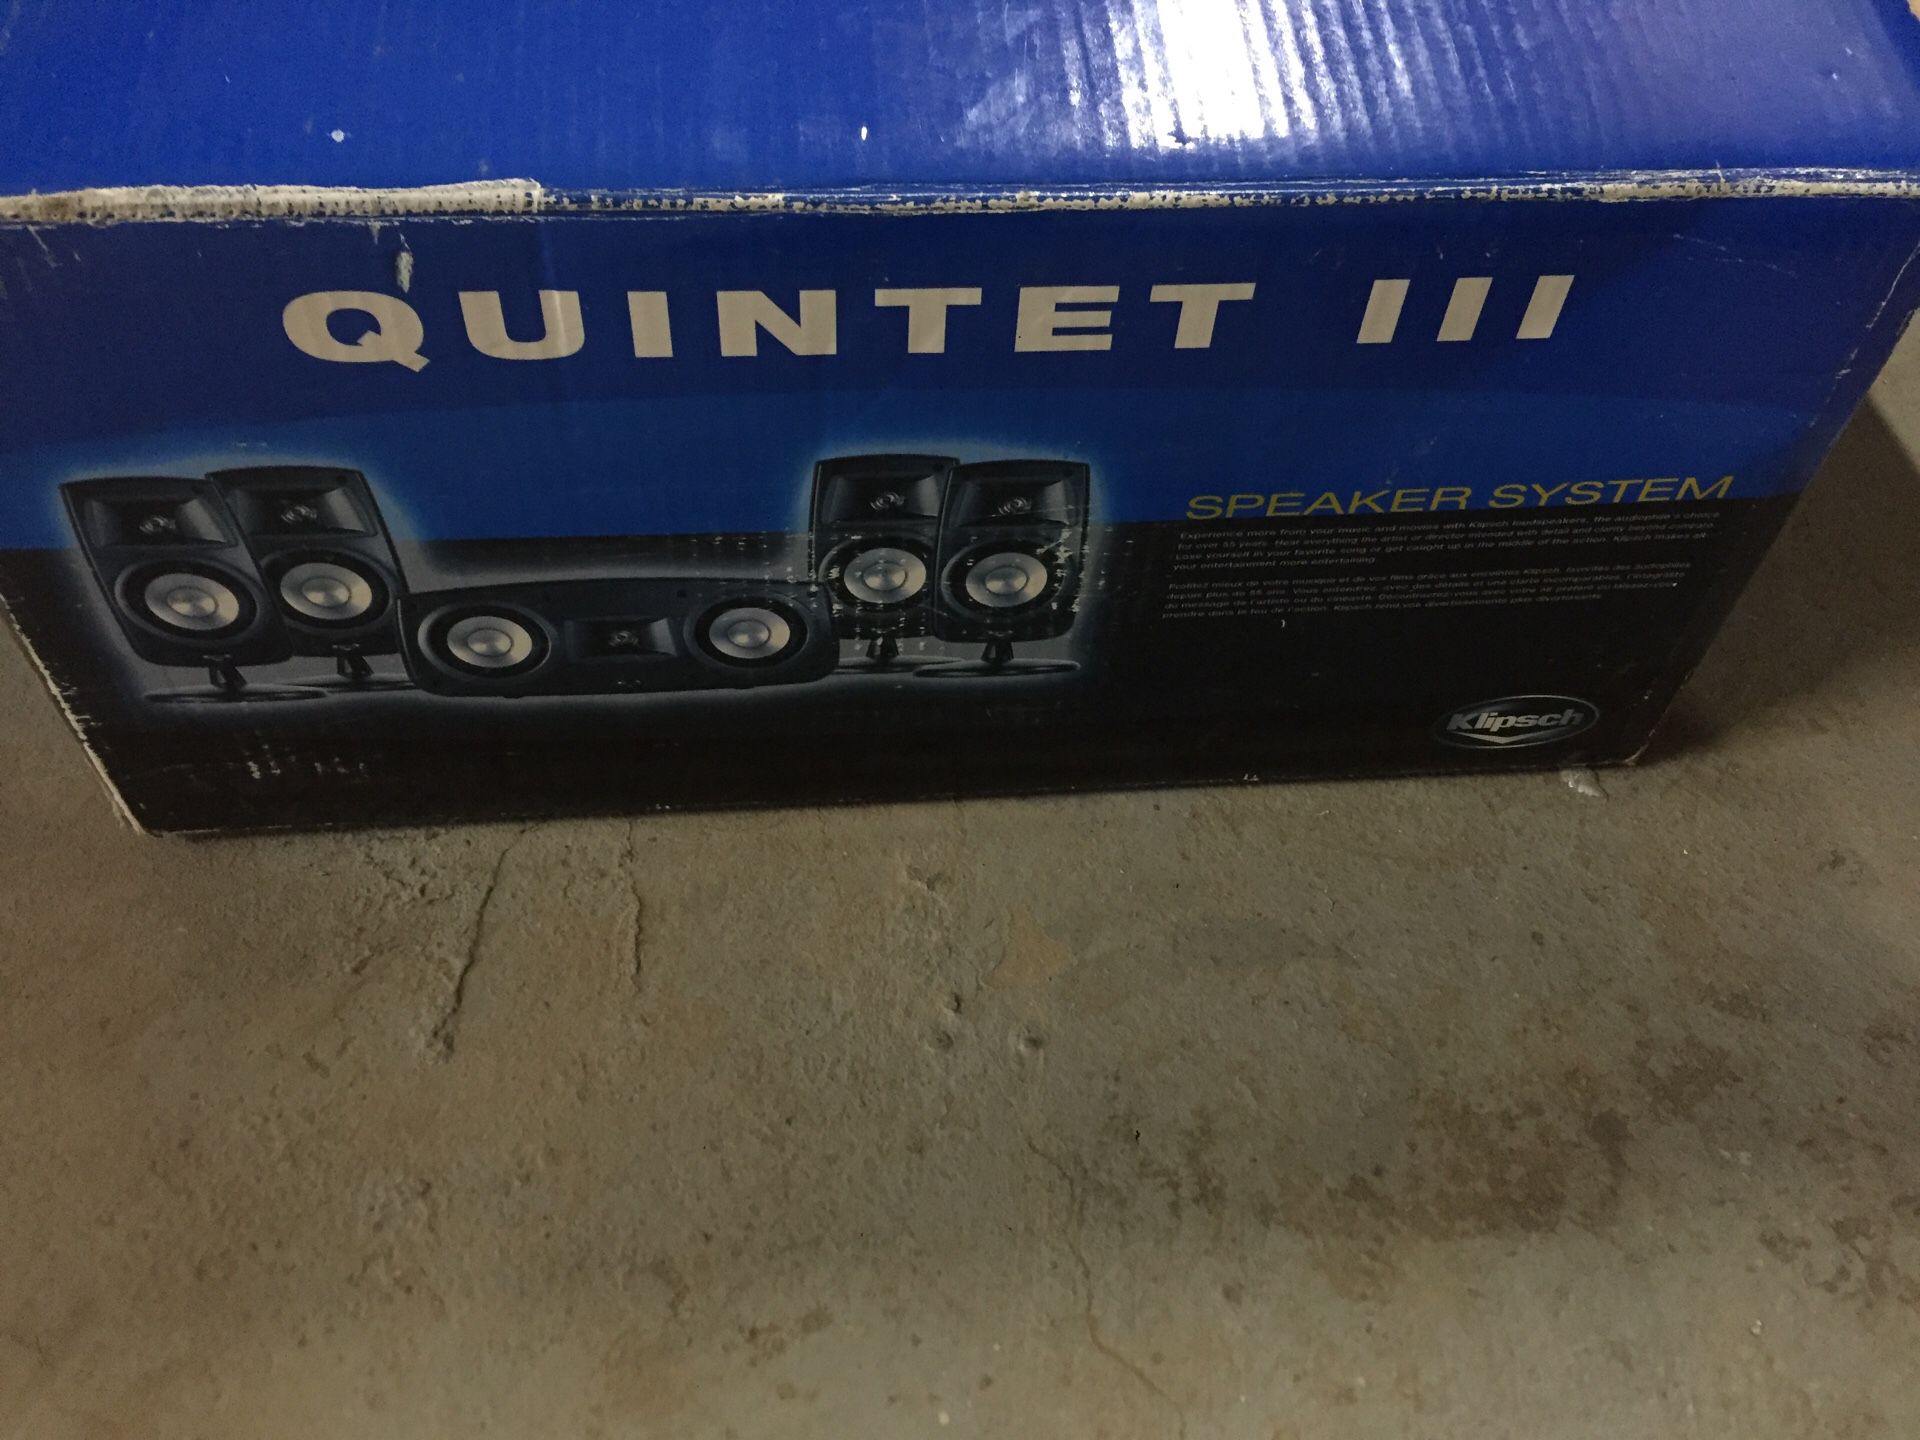 Quintet III speaker system